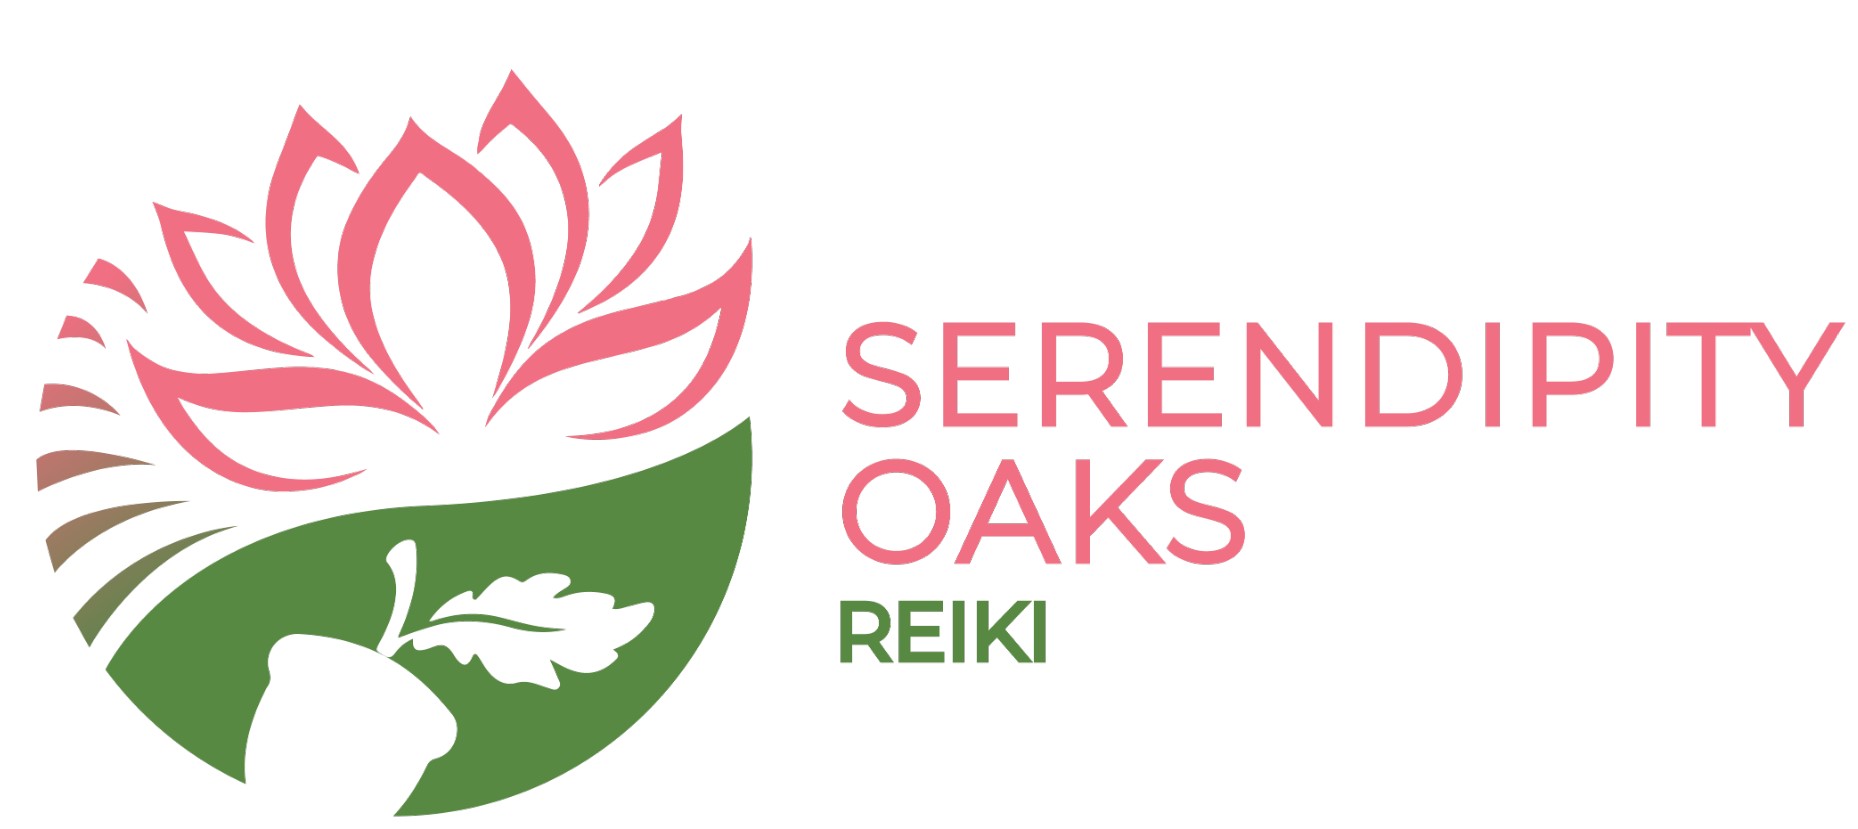 Serendipity Oaks Reiki